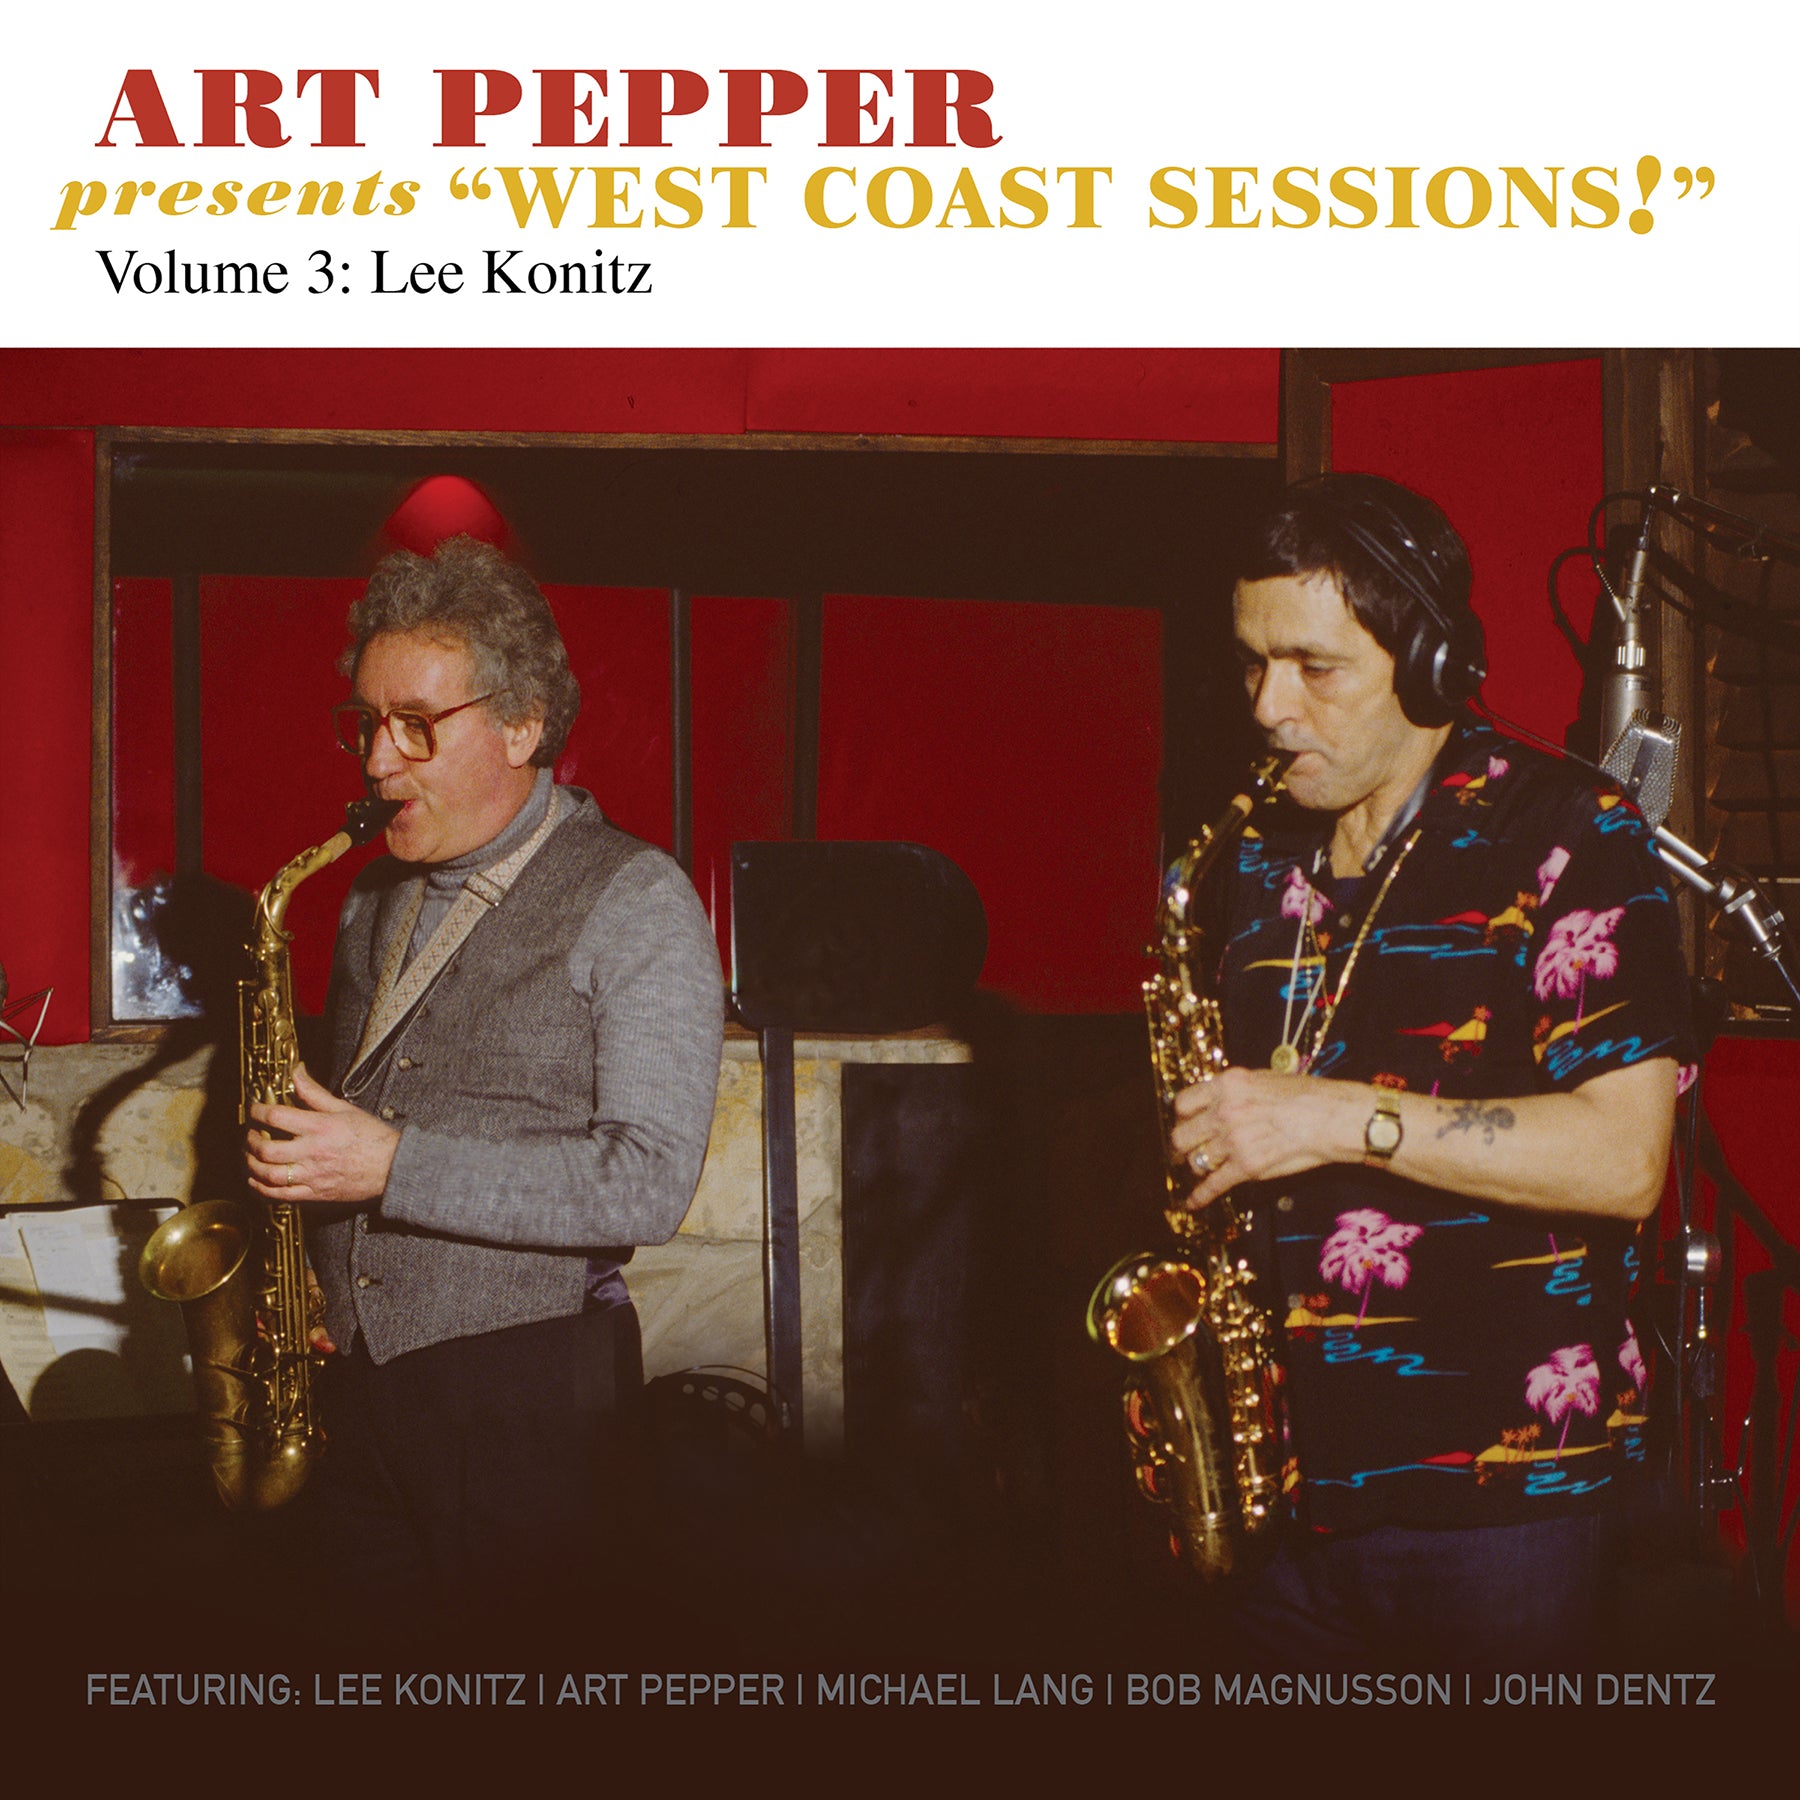 Art Pepper Presents “West Coast Sessions!” Volume 3: Lee Konitz